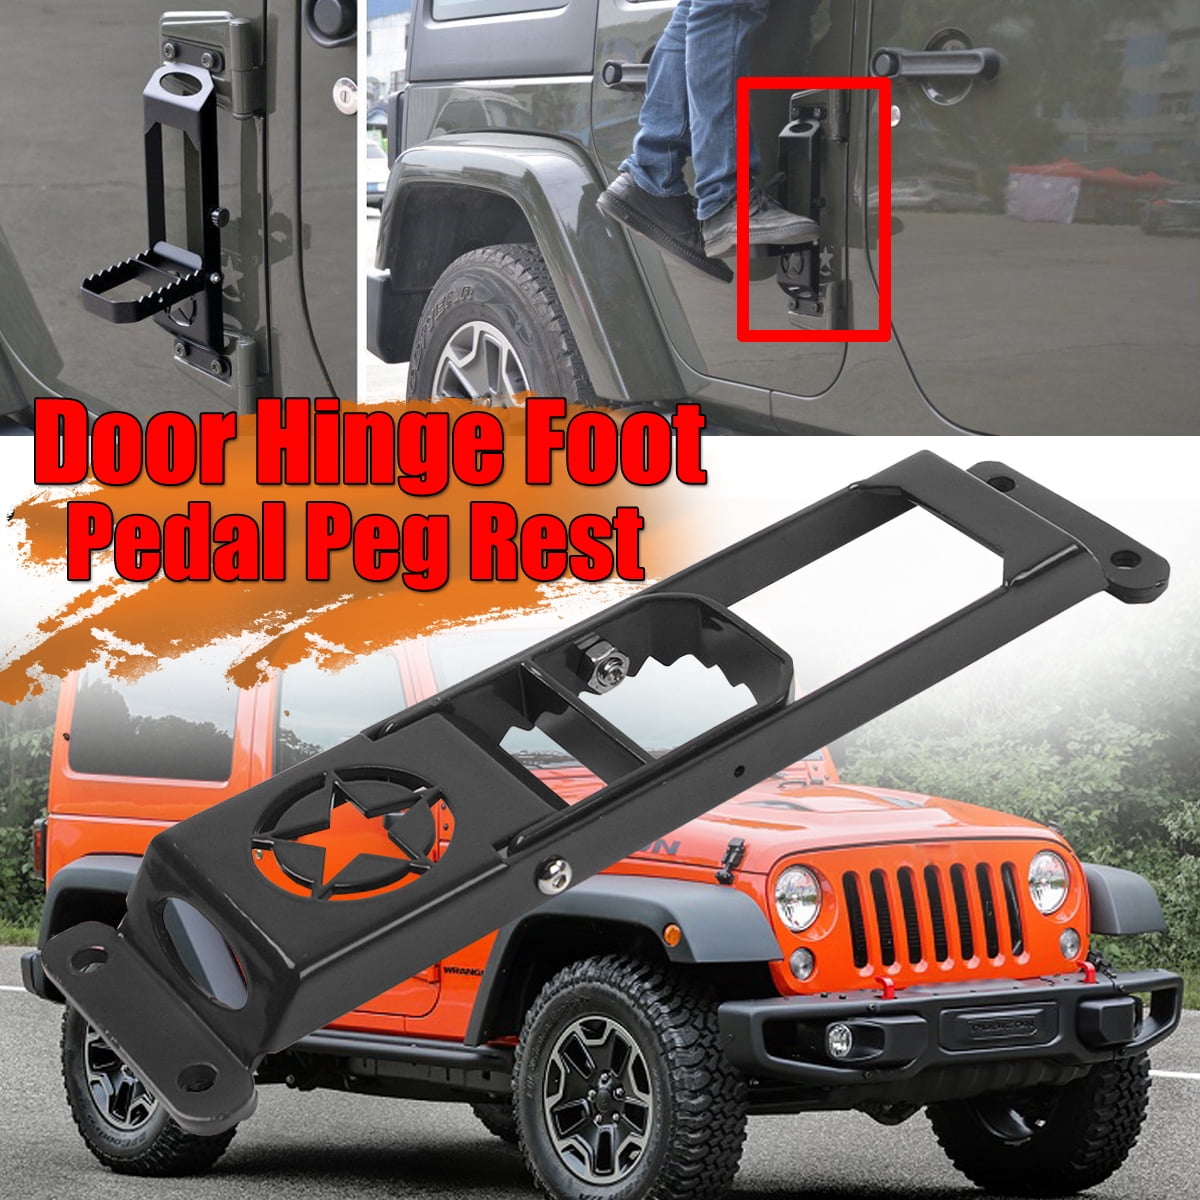 Car Door Hinge Foot Pedal Door Hinge Step Metal Folding Foot Pedal Foot Rest Accessory Fit for Wrangler JK and Unlimited 2007-2017